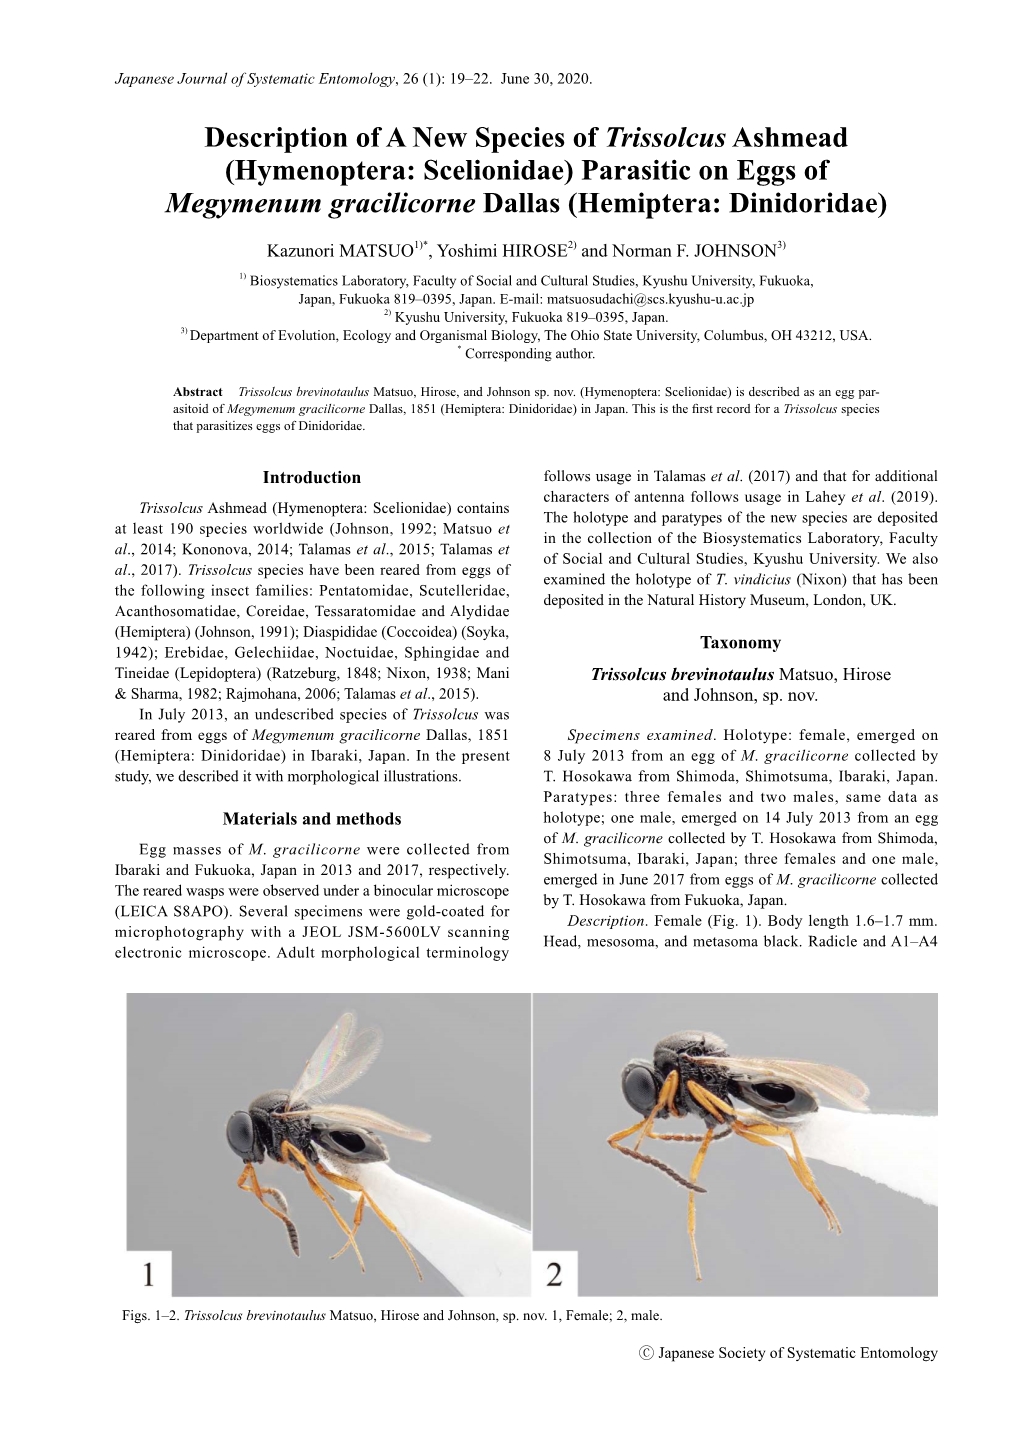 Description of a New Species of Trissolcus Ashmead (Hymenoptera: Scelionidae) Parasitic on Eggs of Megymenum Gracilicorne Dallas (Hemiptera: Dinidoridae)